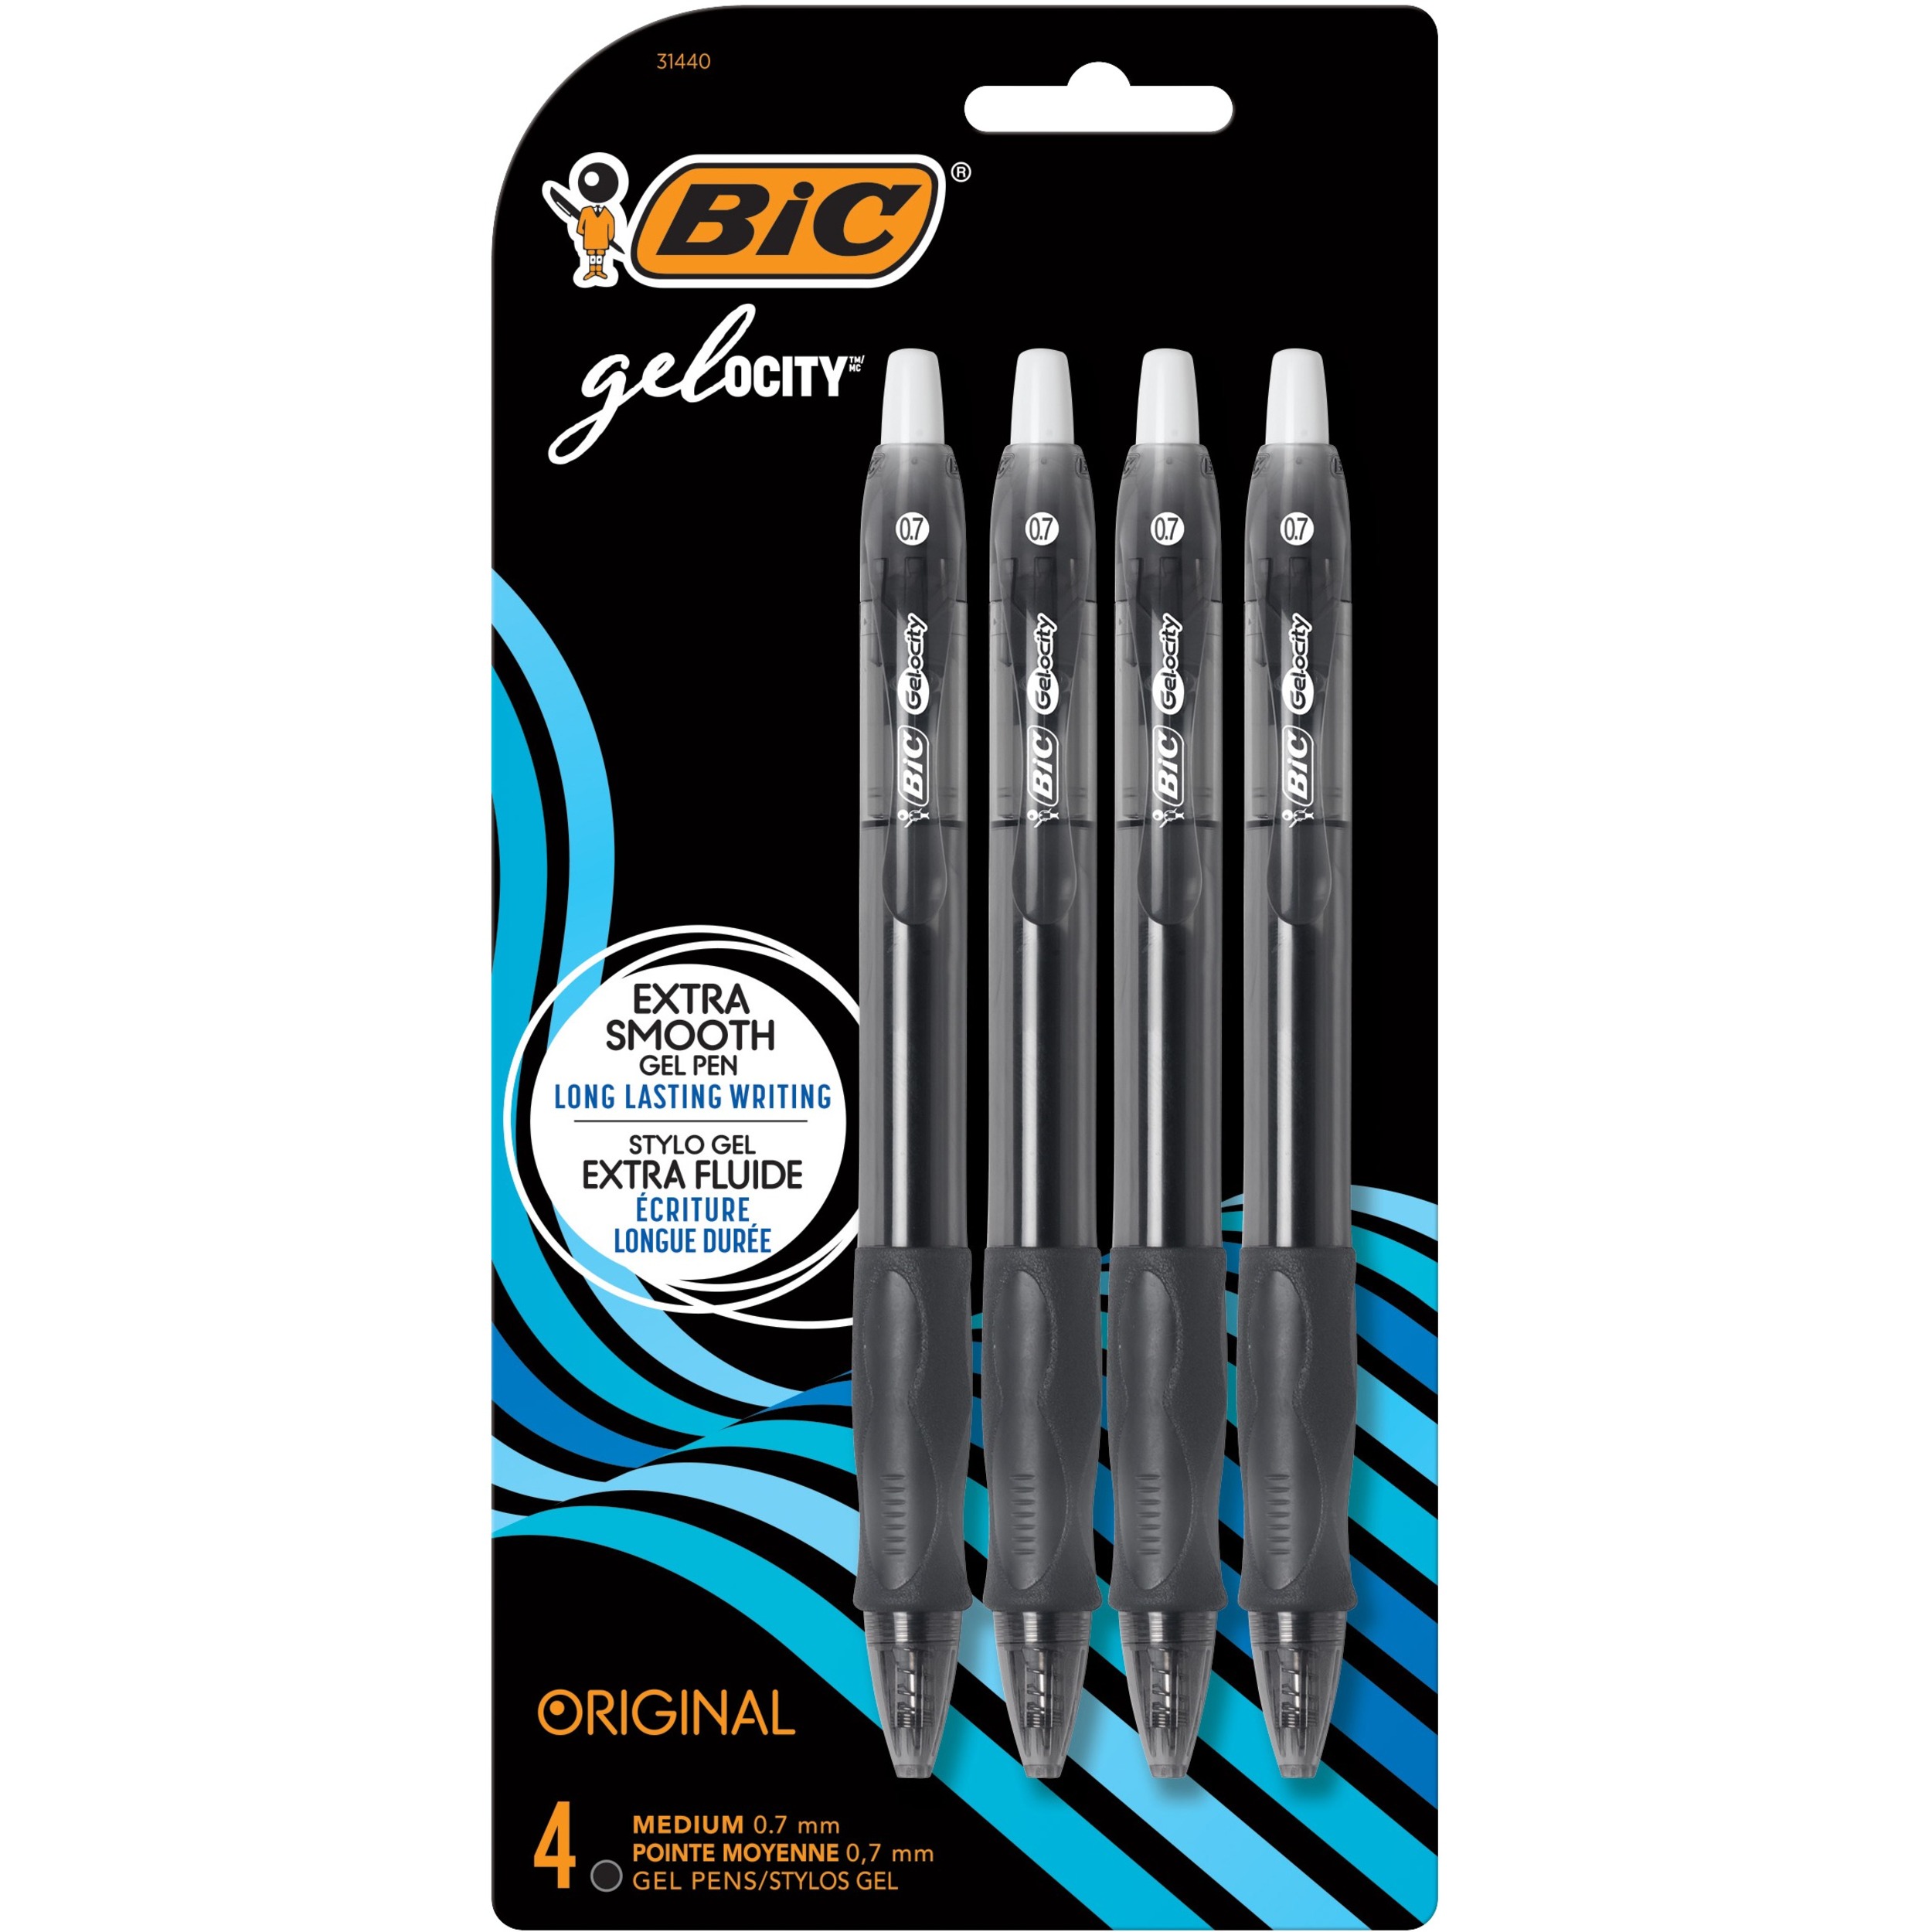 BIC Gel-ocity Gel Pen - Medium Pen Point - 0.7 mm Pen Point Size -  Retractable - Black Gel-based Ink - Black Barrel - Tungsten Carbide Tip - 1  / Pack - Madill - The Office Company